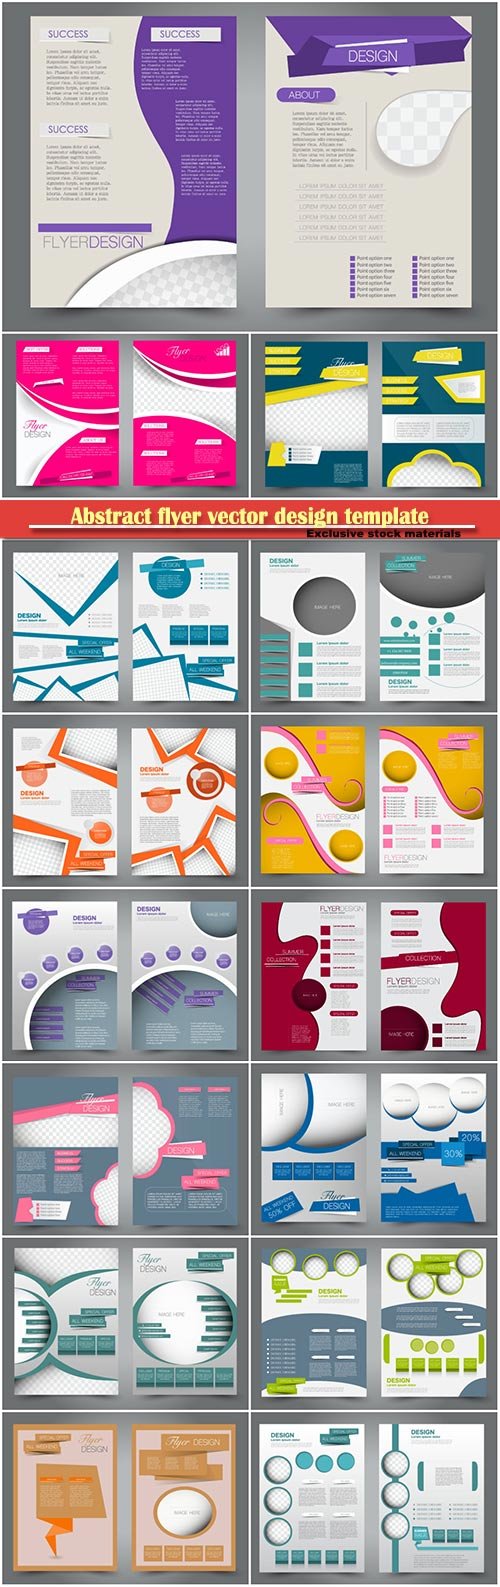 Abstract flyer vector design template, business brochure